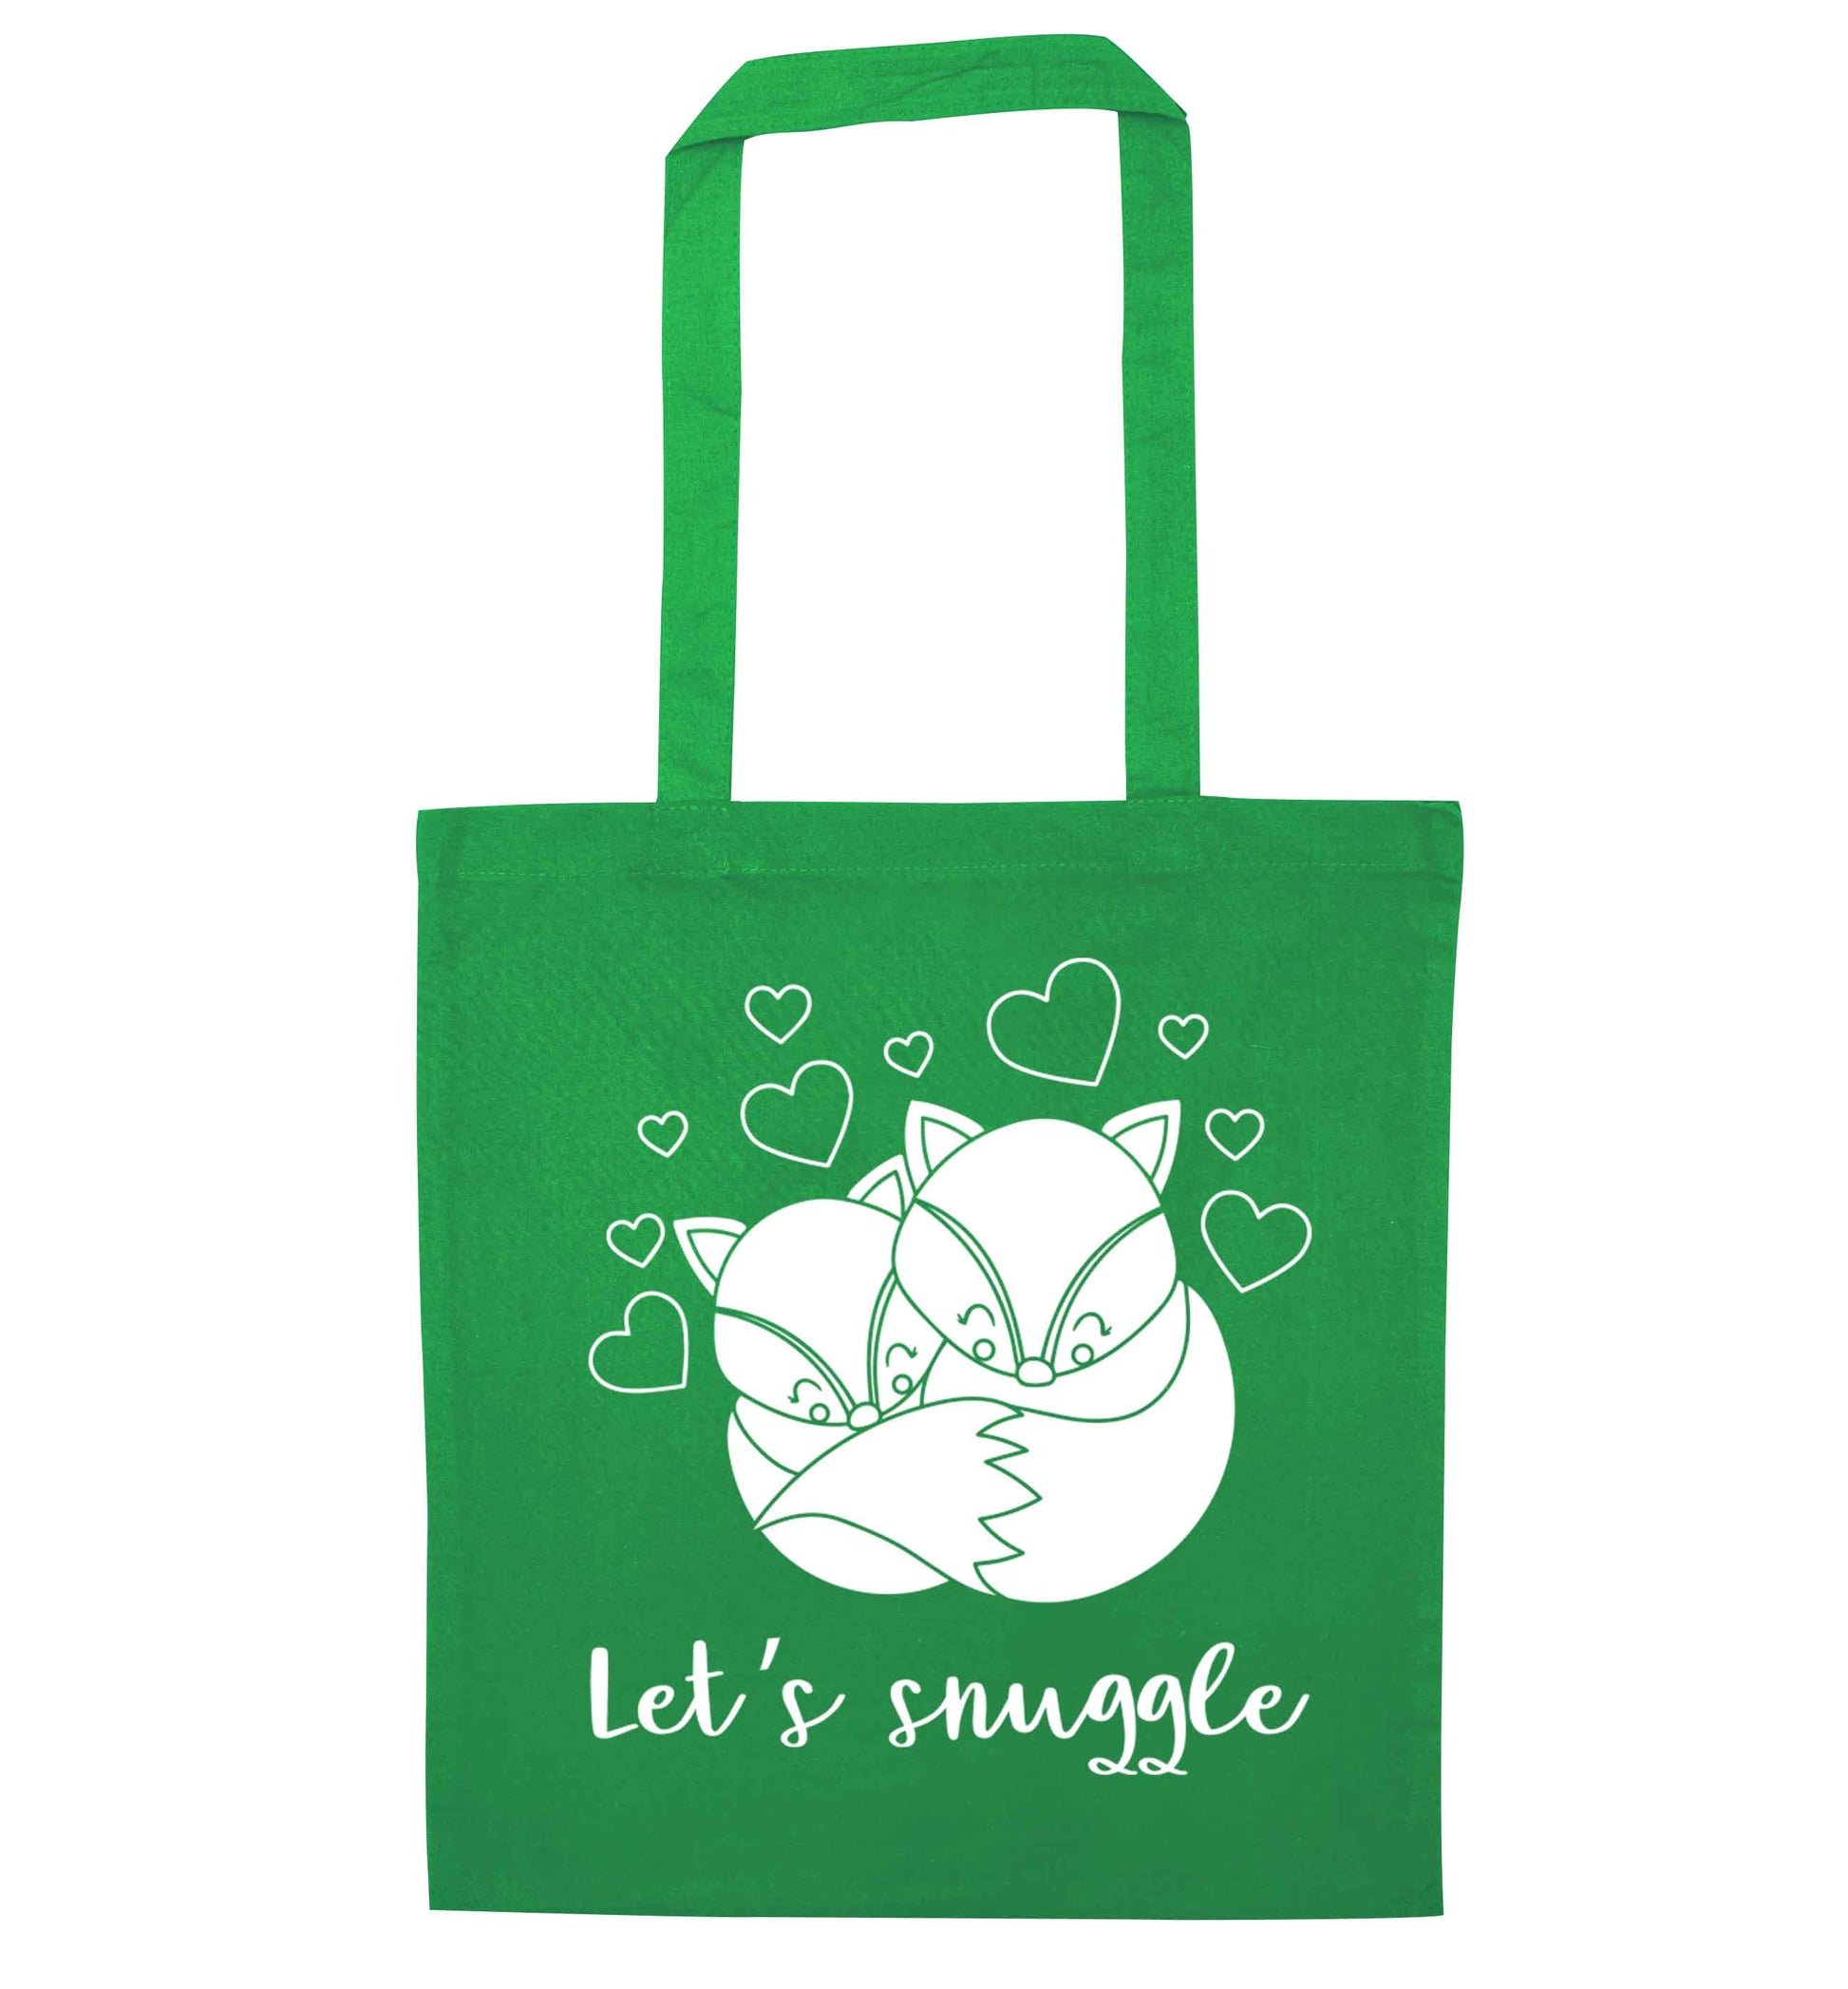 Let's snuggle green tote bag